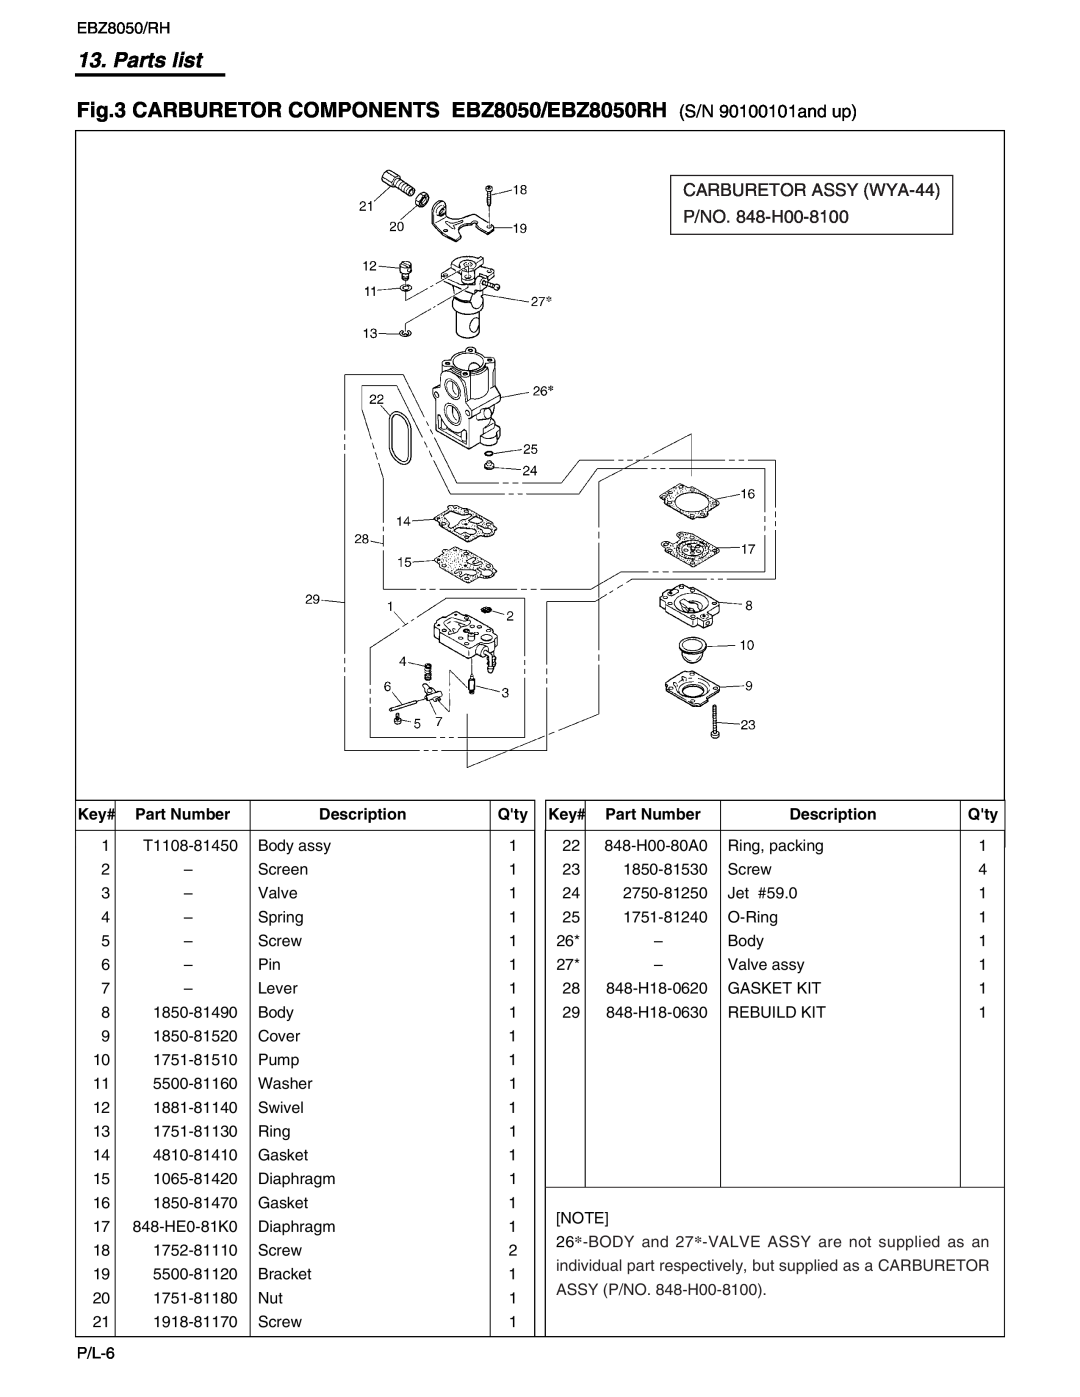 RedMax manual CARBURETOR COMPONENTS EBZ8050/EBZ8050RH S/N 90100101and up, CARBURETOR ASSY WYA-44 P/NO. 848-H00-8100 